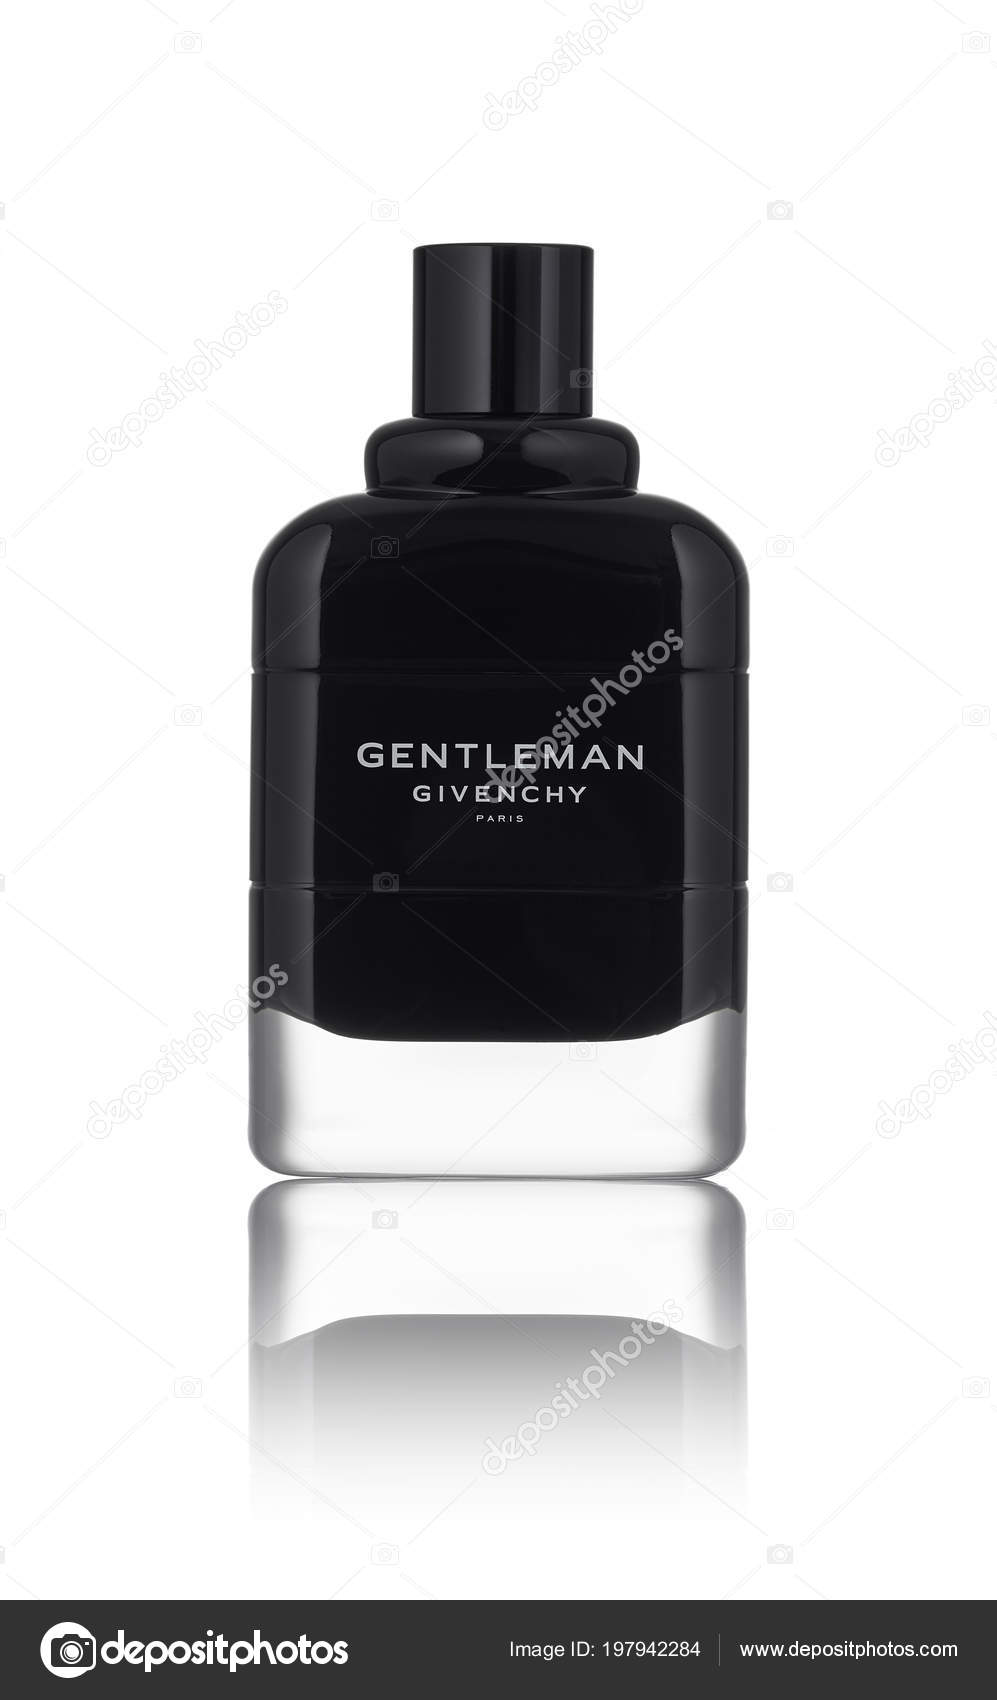 new perfume givenchy 2018